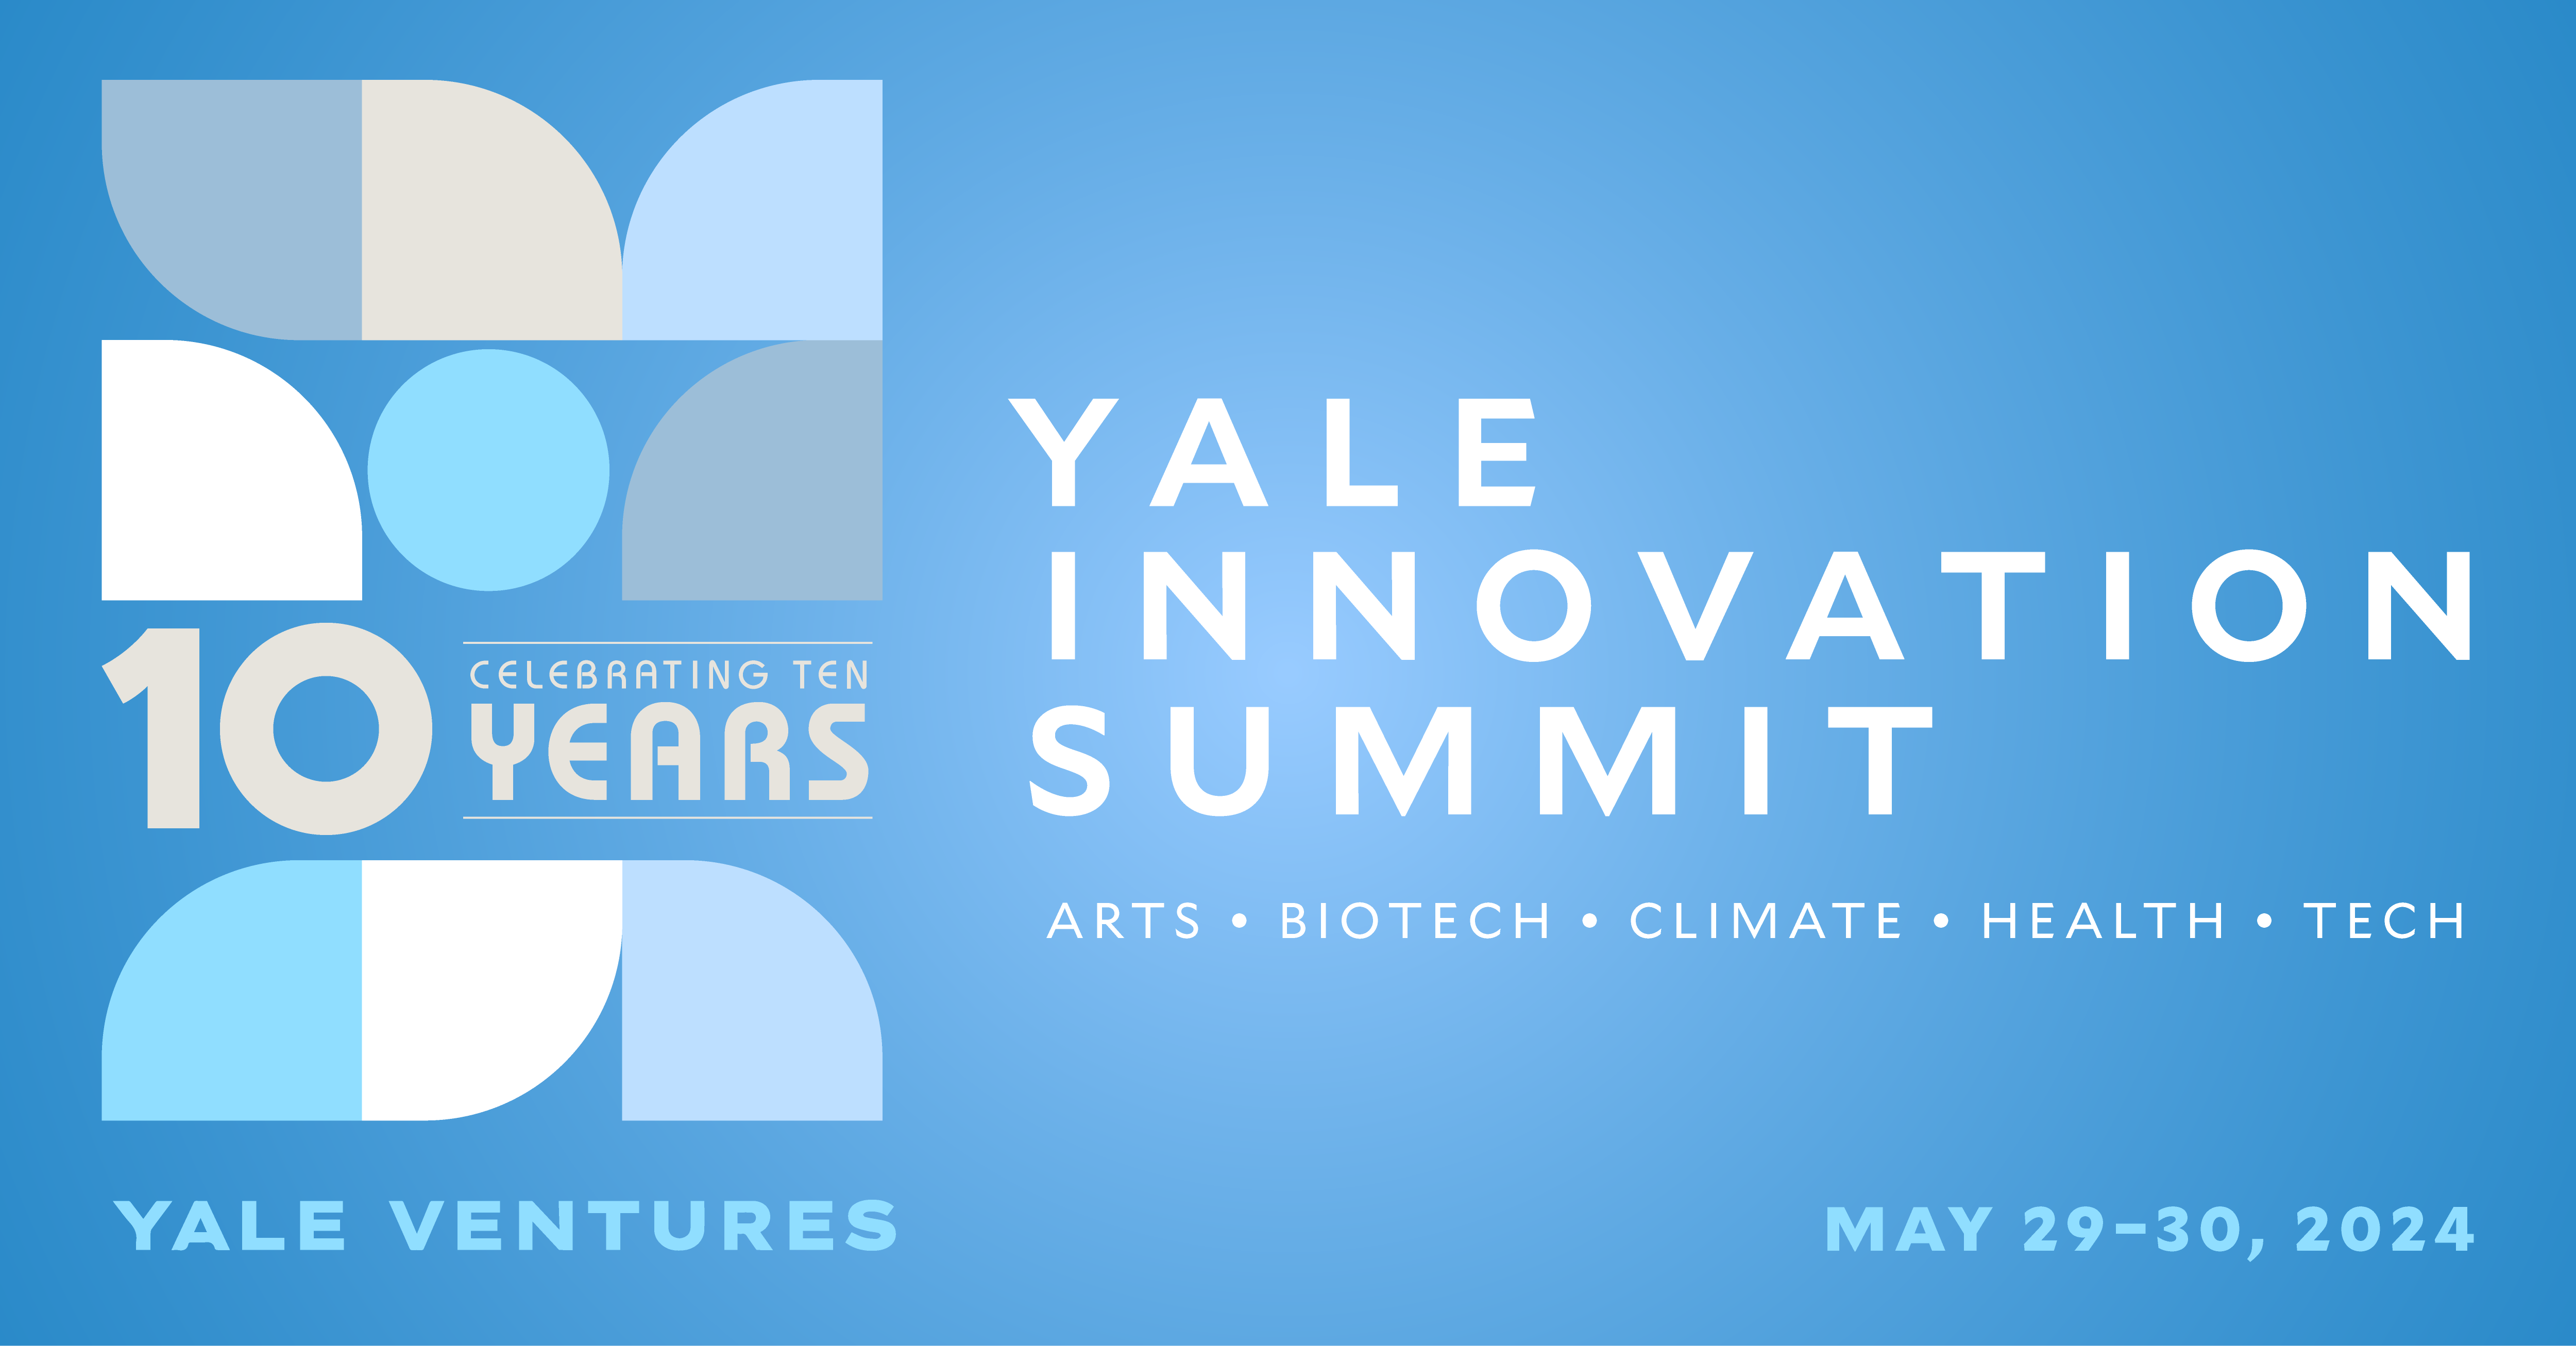 Yale Innovation Summit